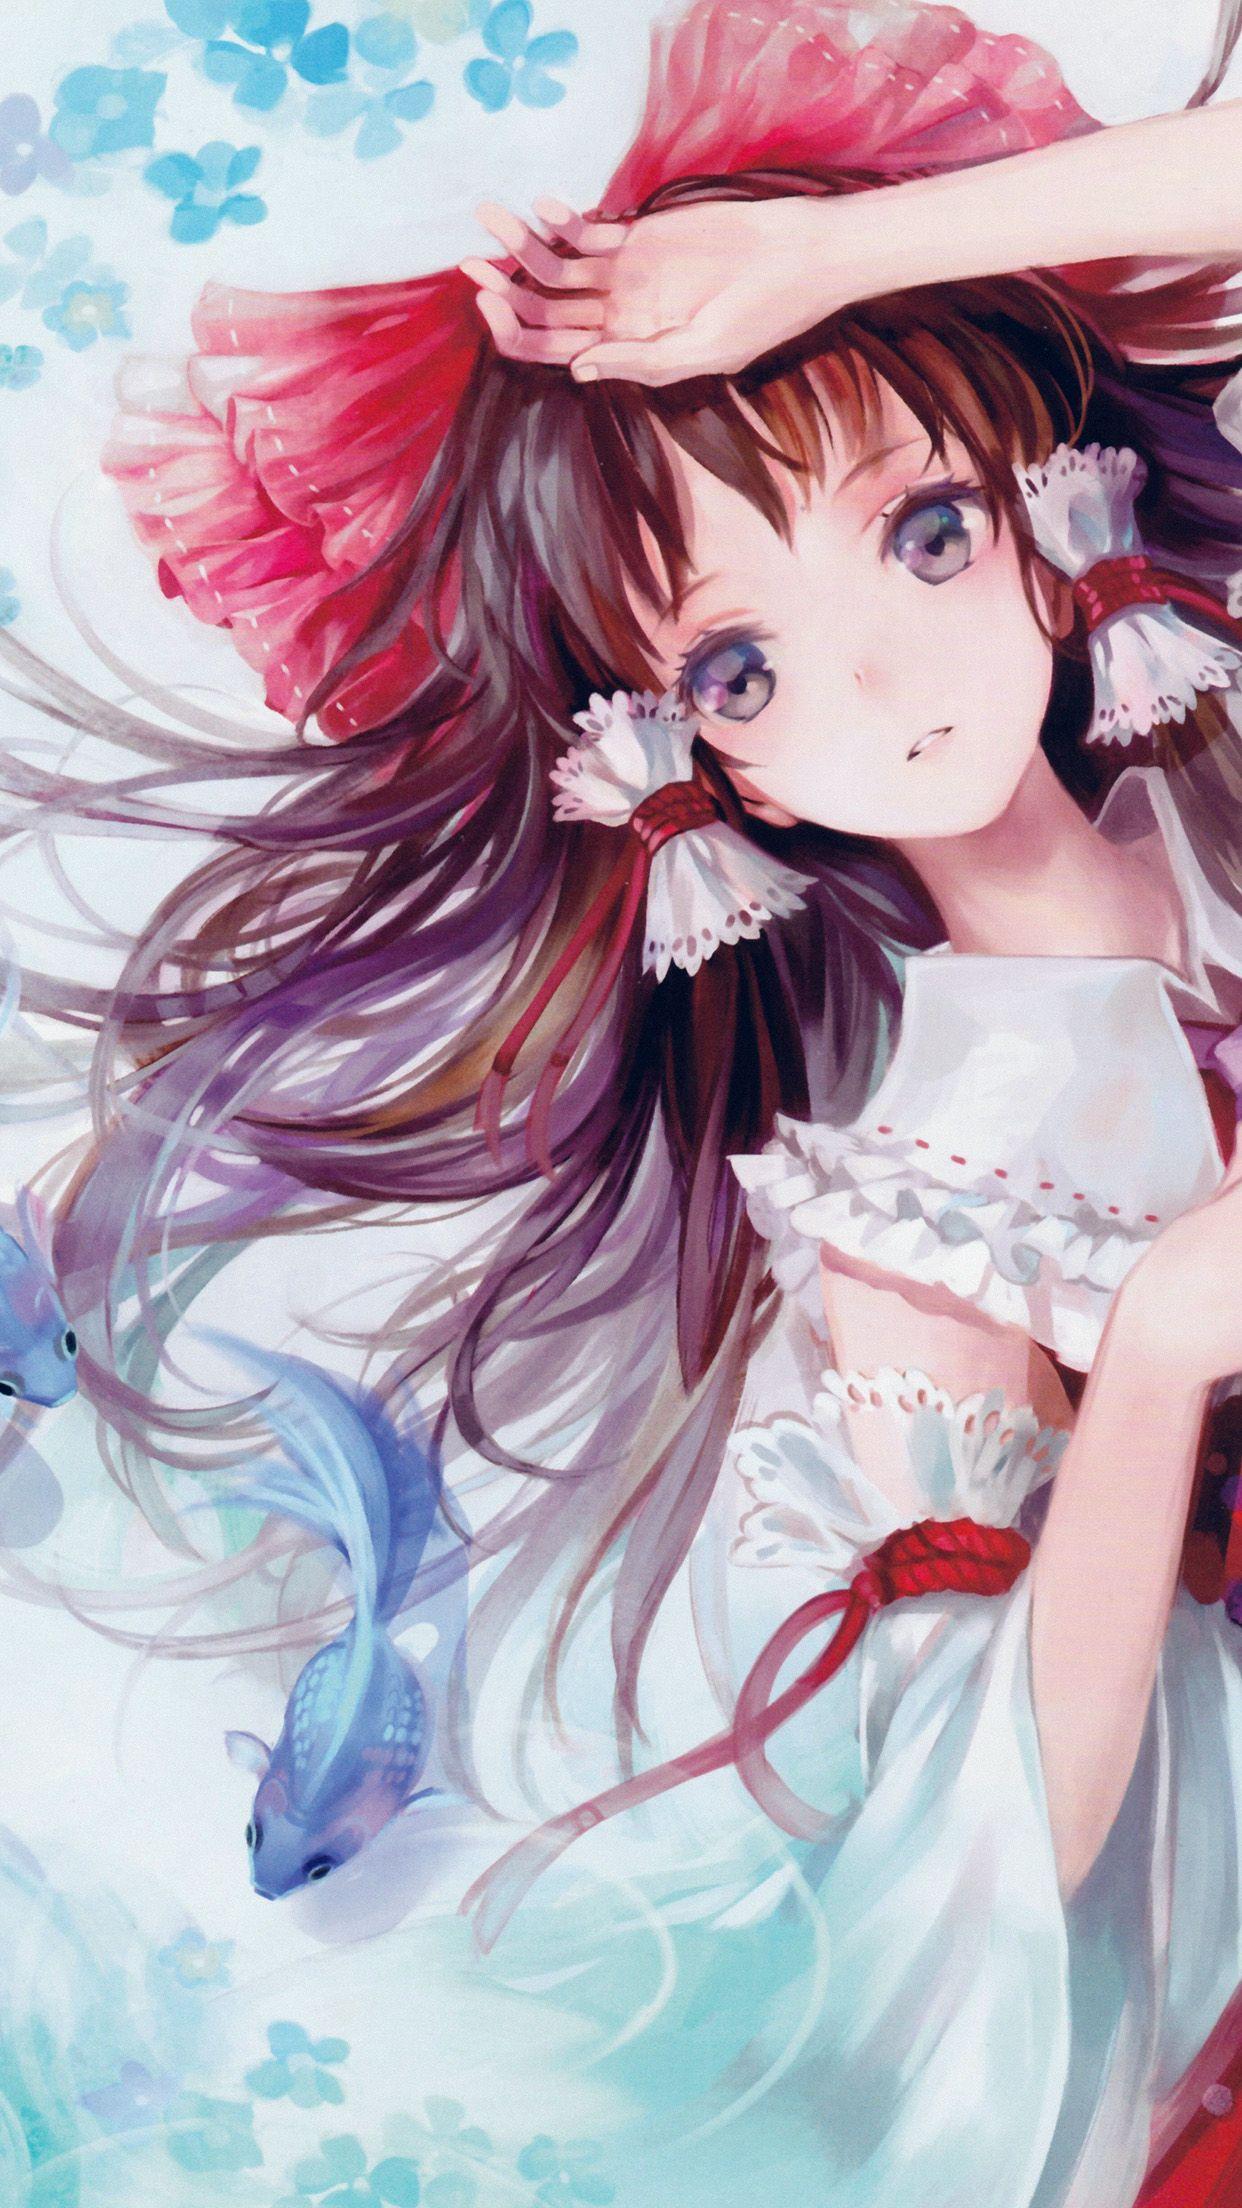 Anime Girl iPhone Wallpaper Free Anime Girl iPhone